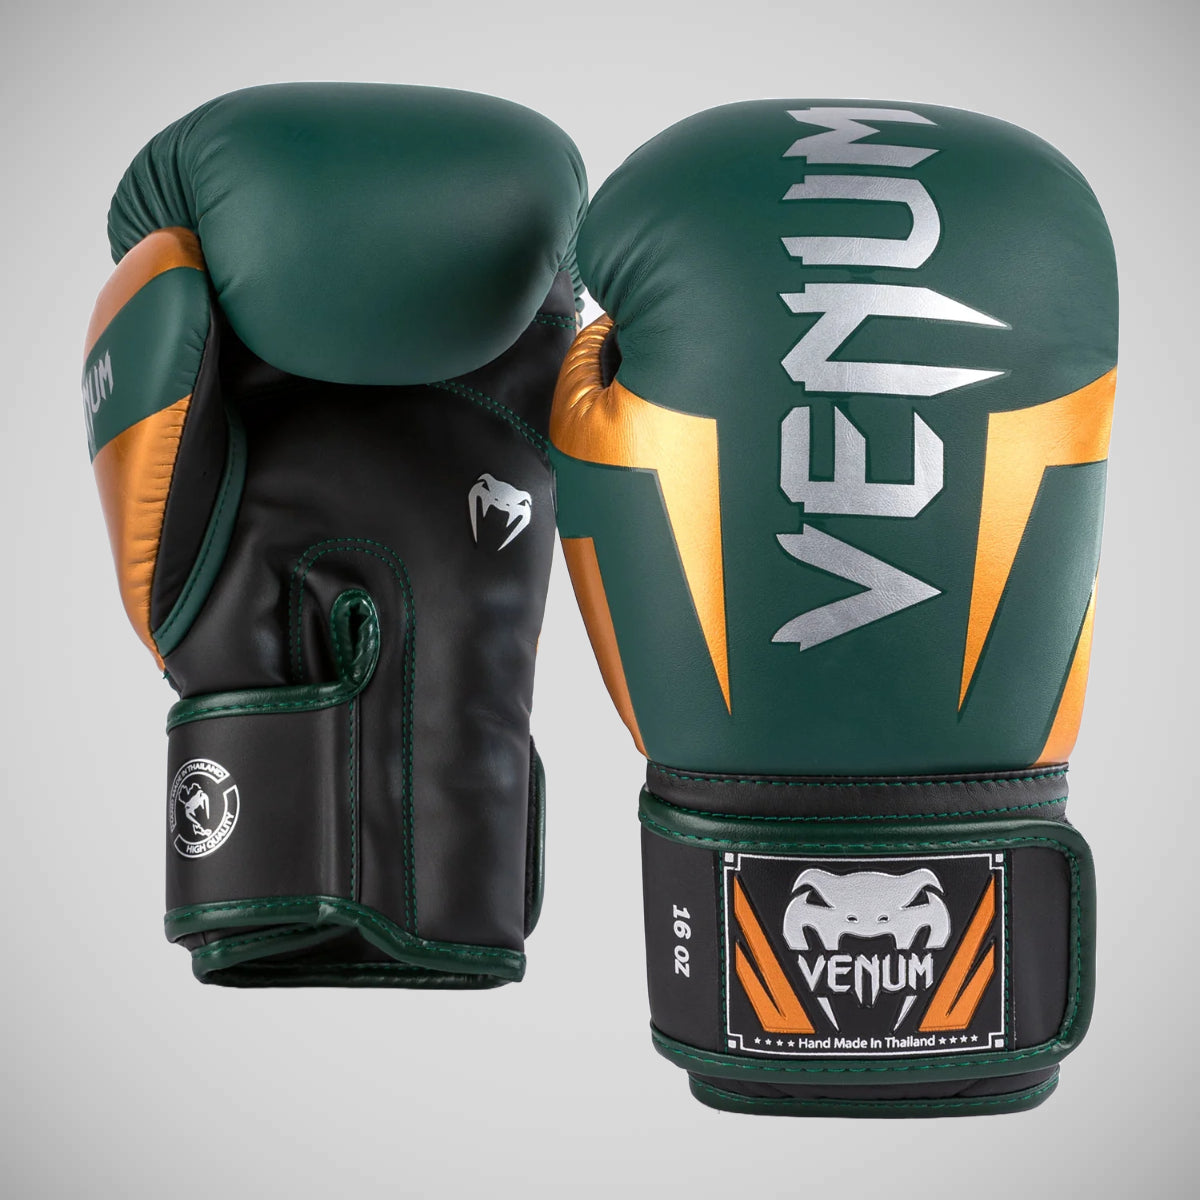 Venum - The World's leading combat sports brand.